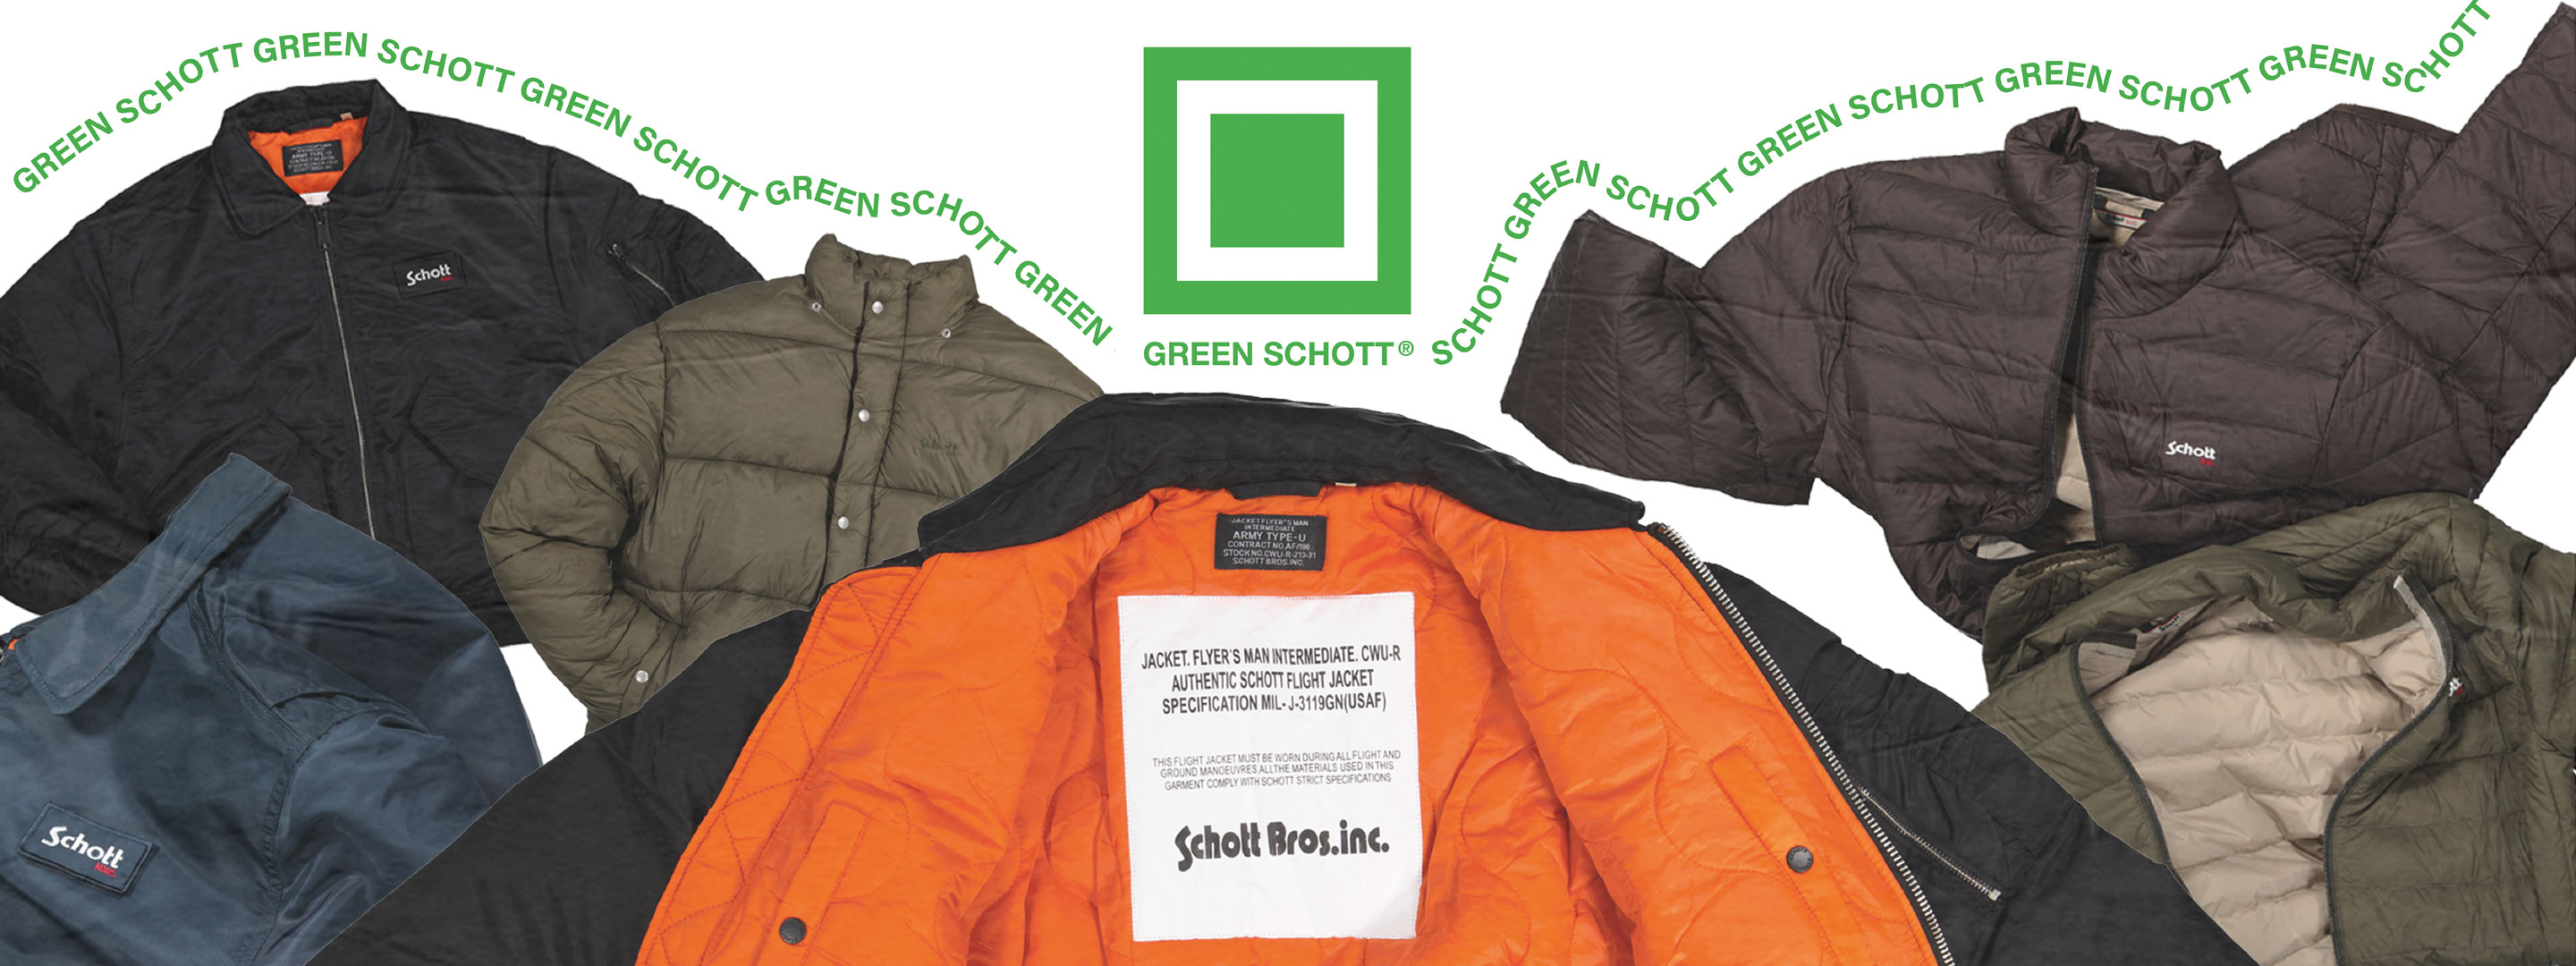 Green Schott